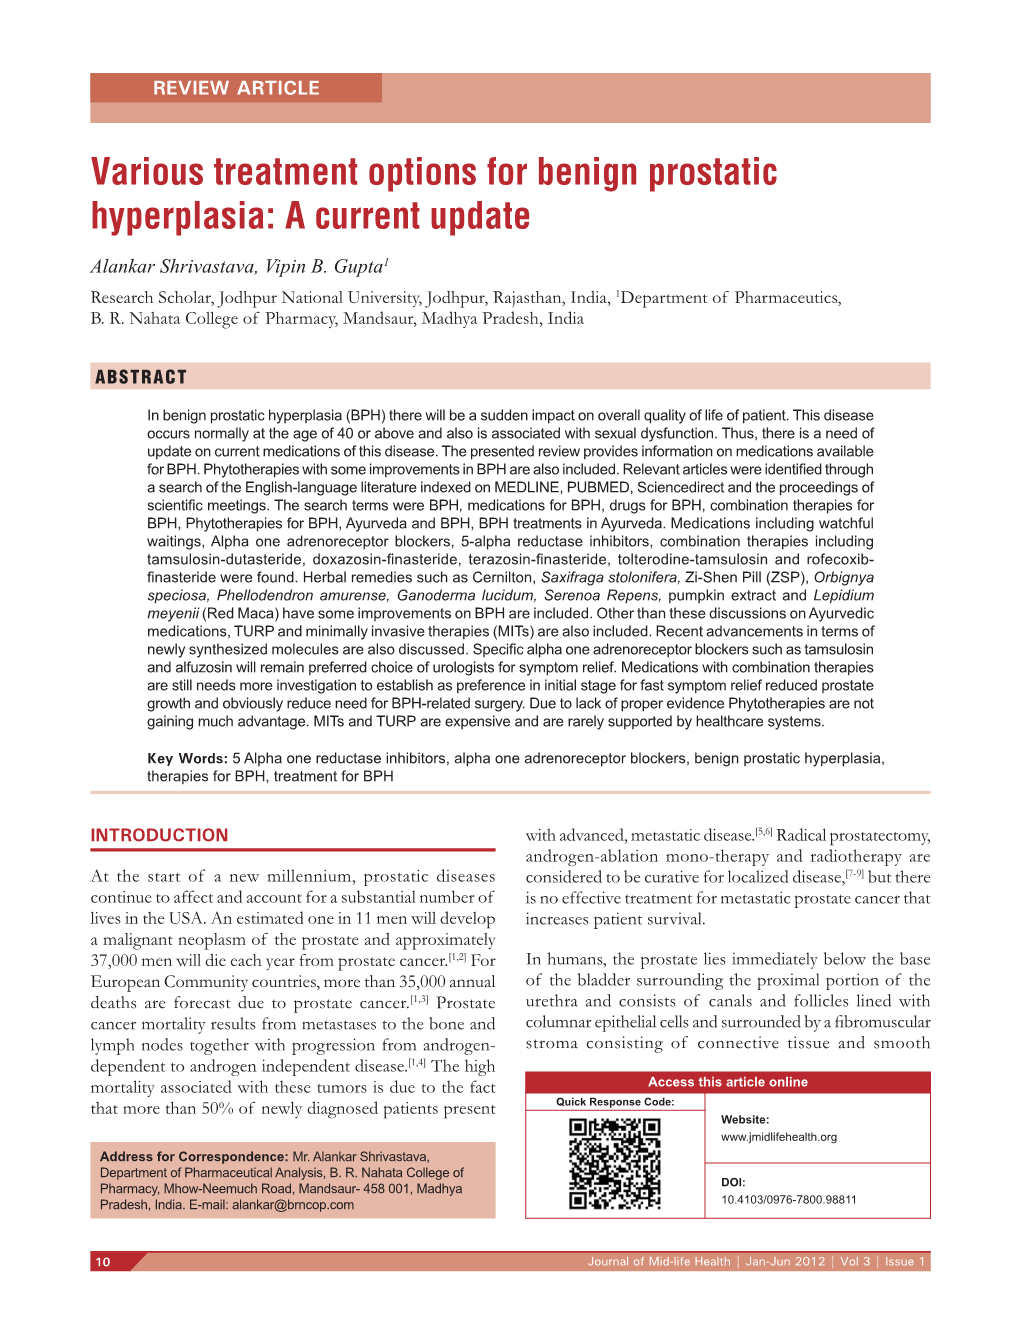 Various Treatment Options for Benign Prostatic Hyperplasia: a Current Update Alankar Shrivastava, Vipin B